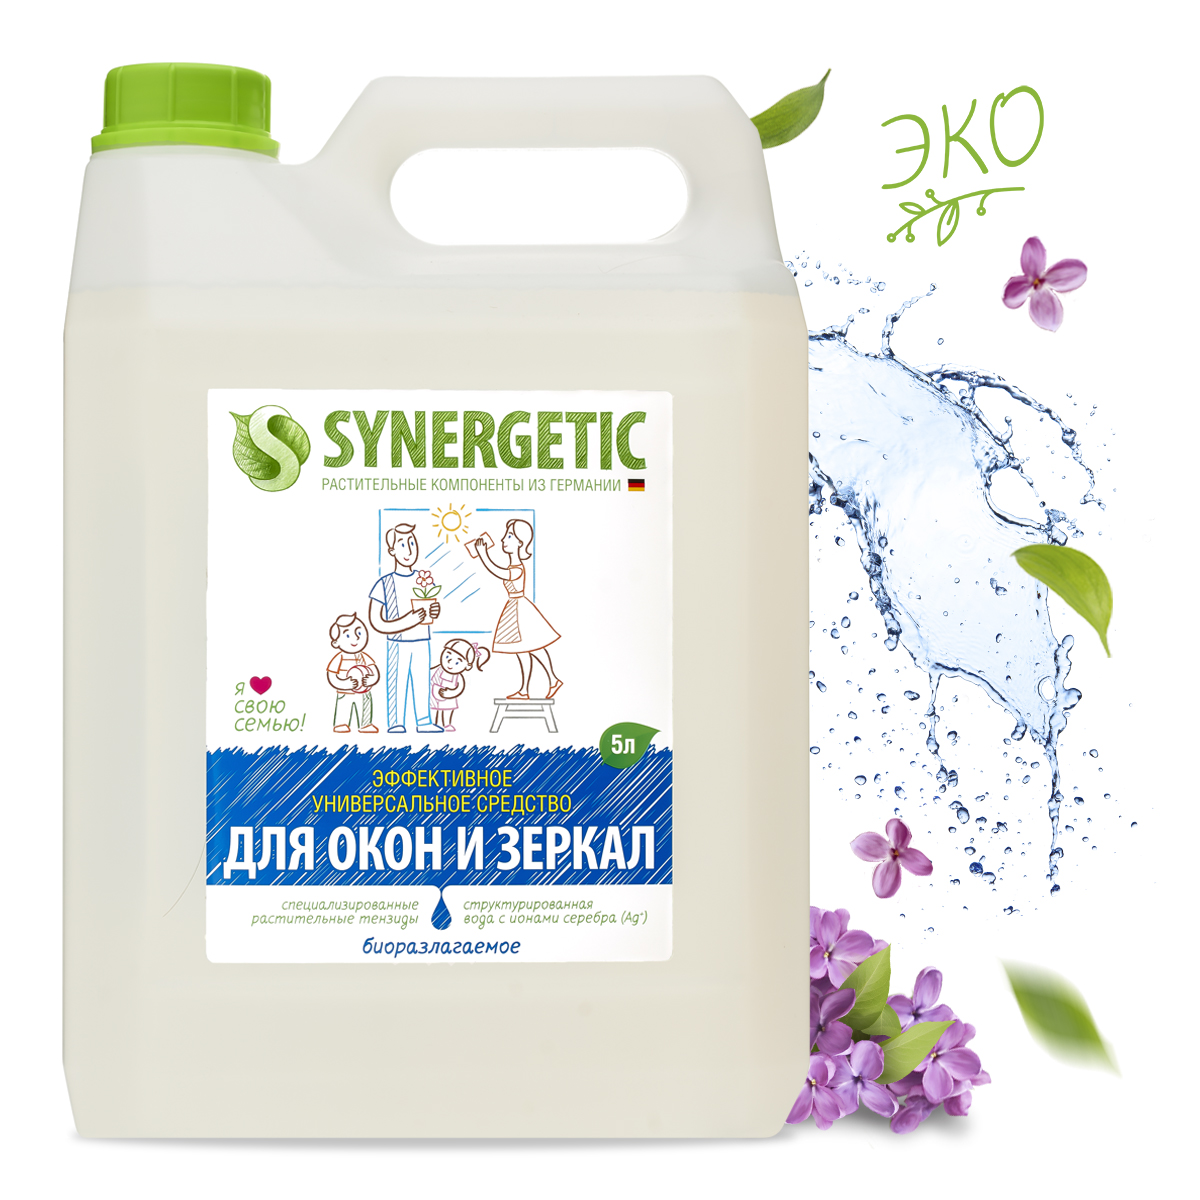 Средство для мытья synergetic 5 л. Synergetic миндальное молочко. Synergetic средство для устранения засоров 1л. Средство для мытья окон Синергетик. Синерджетик для мытья стекол.